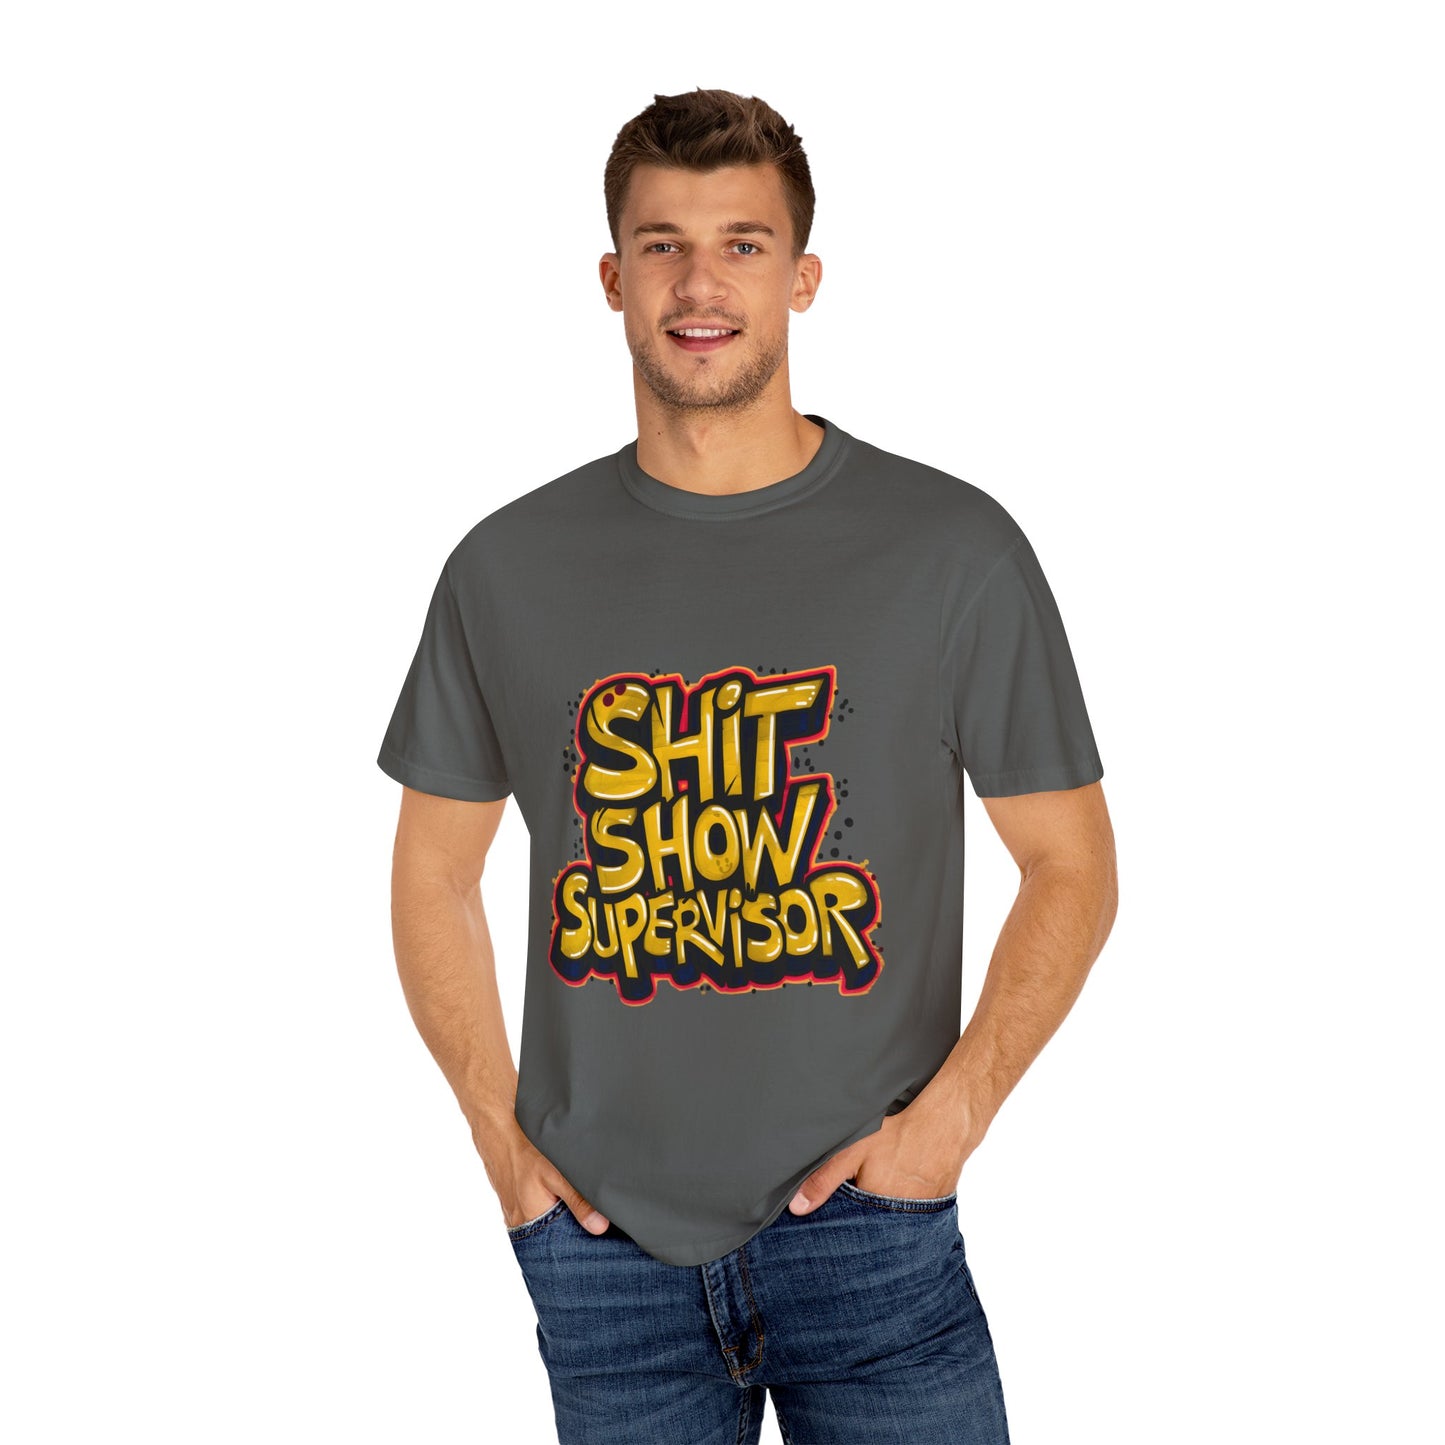 Shit Show Supervisor Urban Sarcastic Graphic Unisex Garment Dyed T-shirt Cotton Funny Humorous Graphic Soft Premium Unisex Men Women Pepper T-shirt Birthday Gift-51